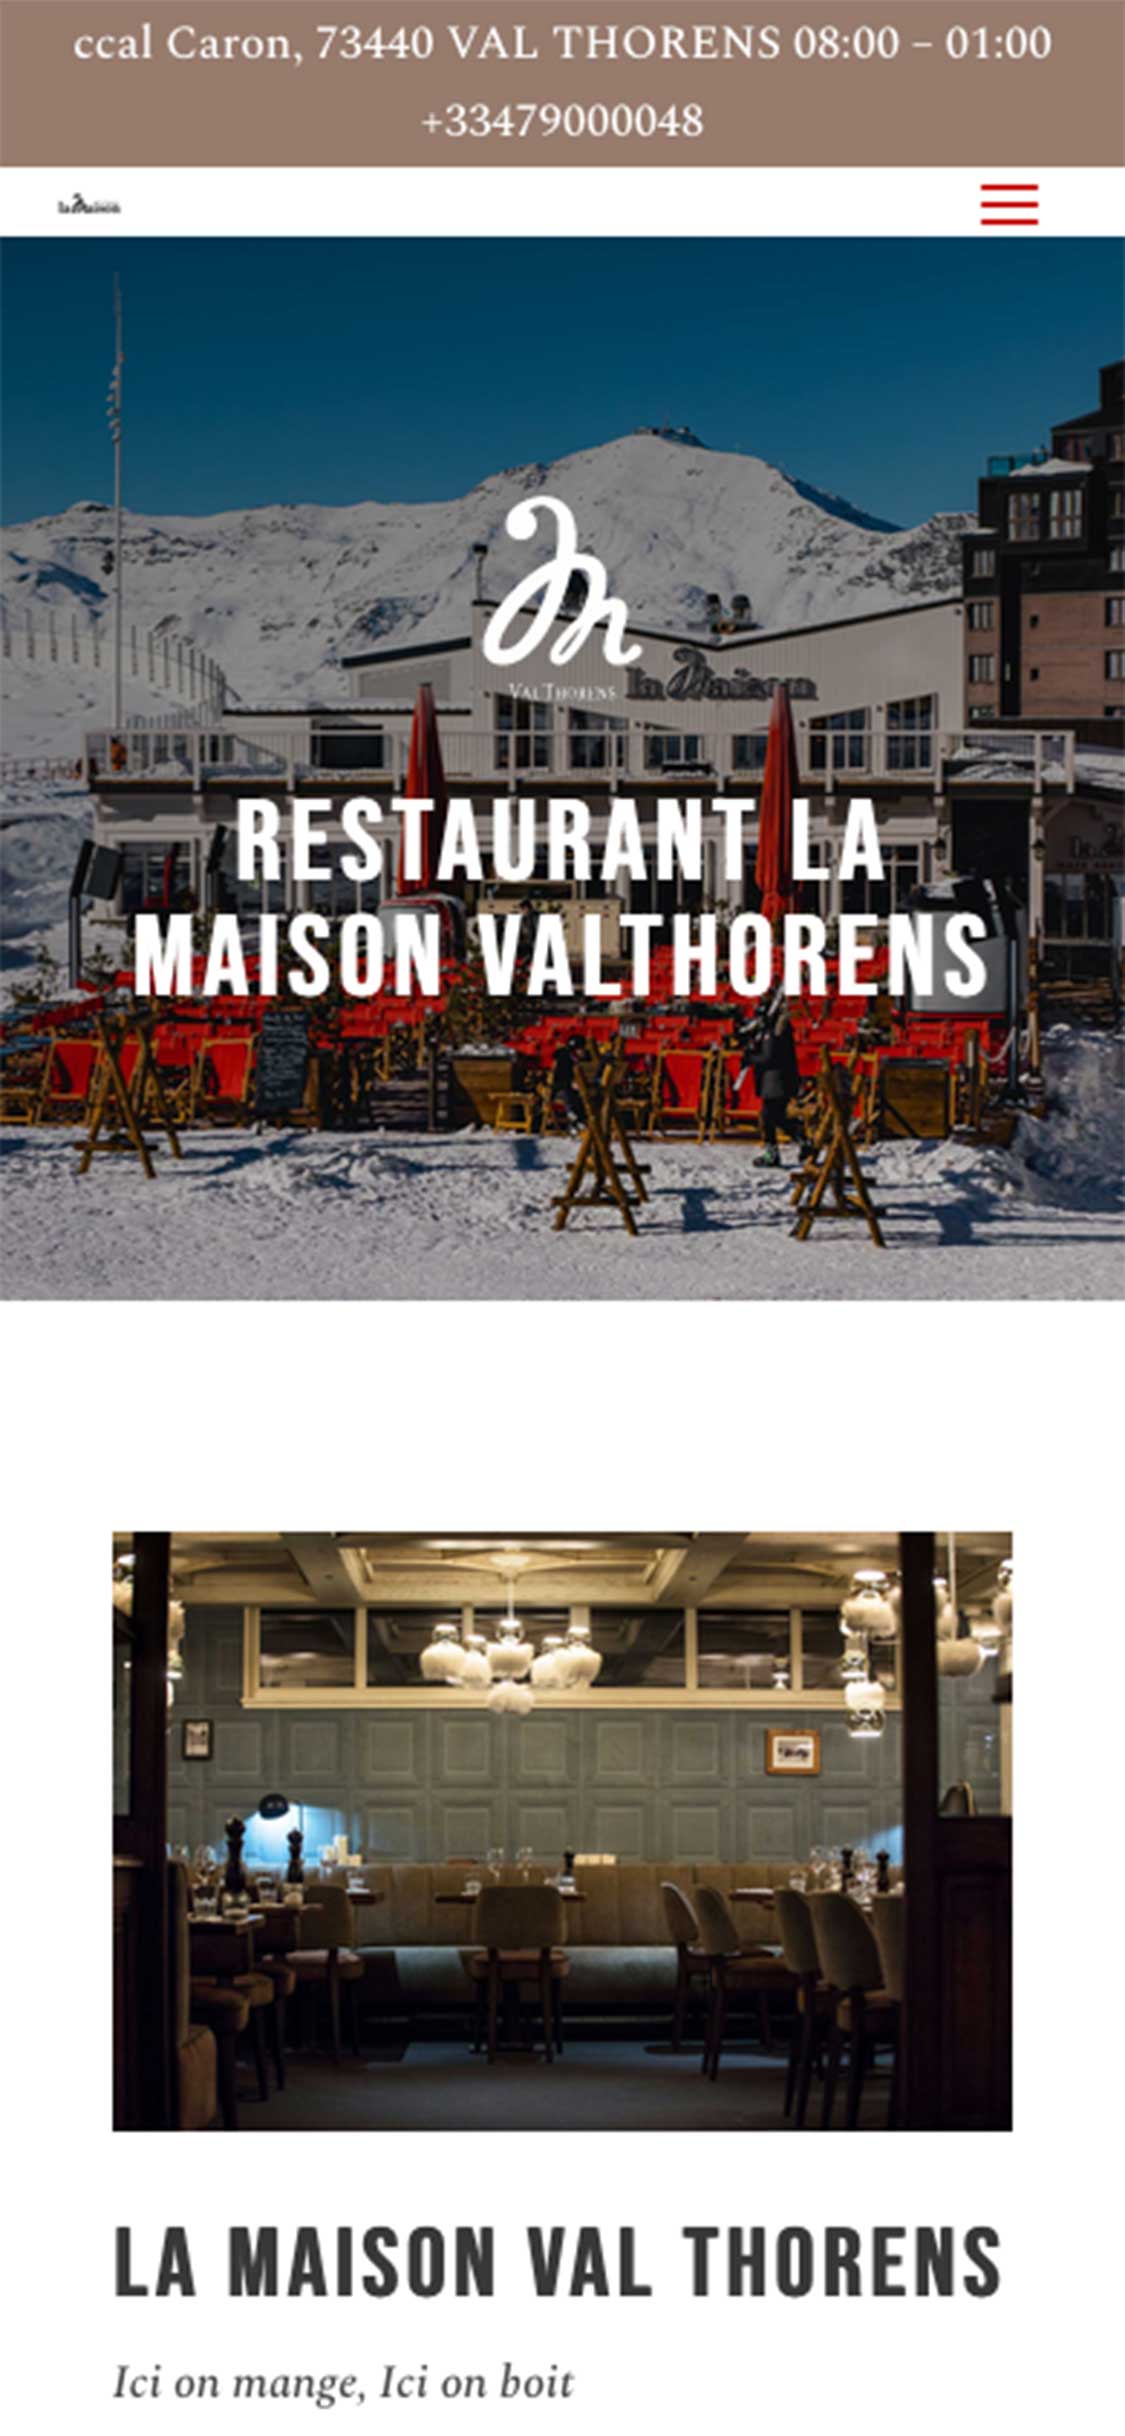 La-maison-Val-Thorens-Bar-Restaurant-pizza-mobile-01